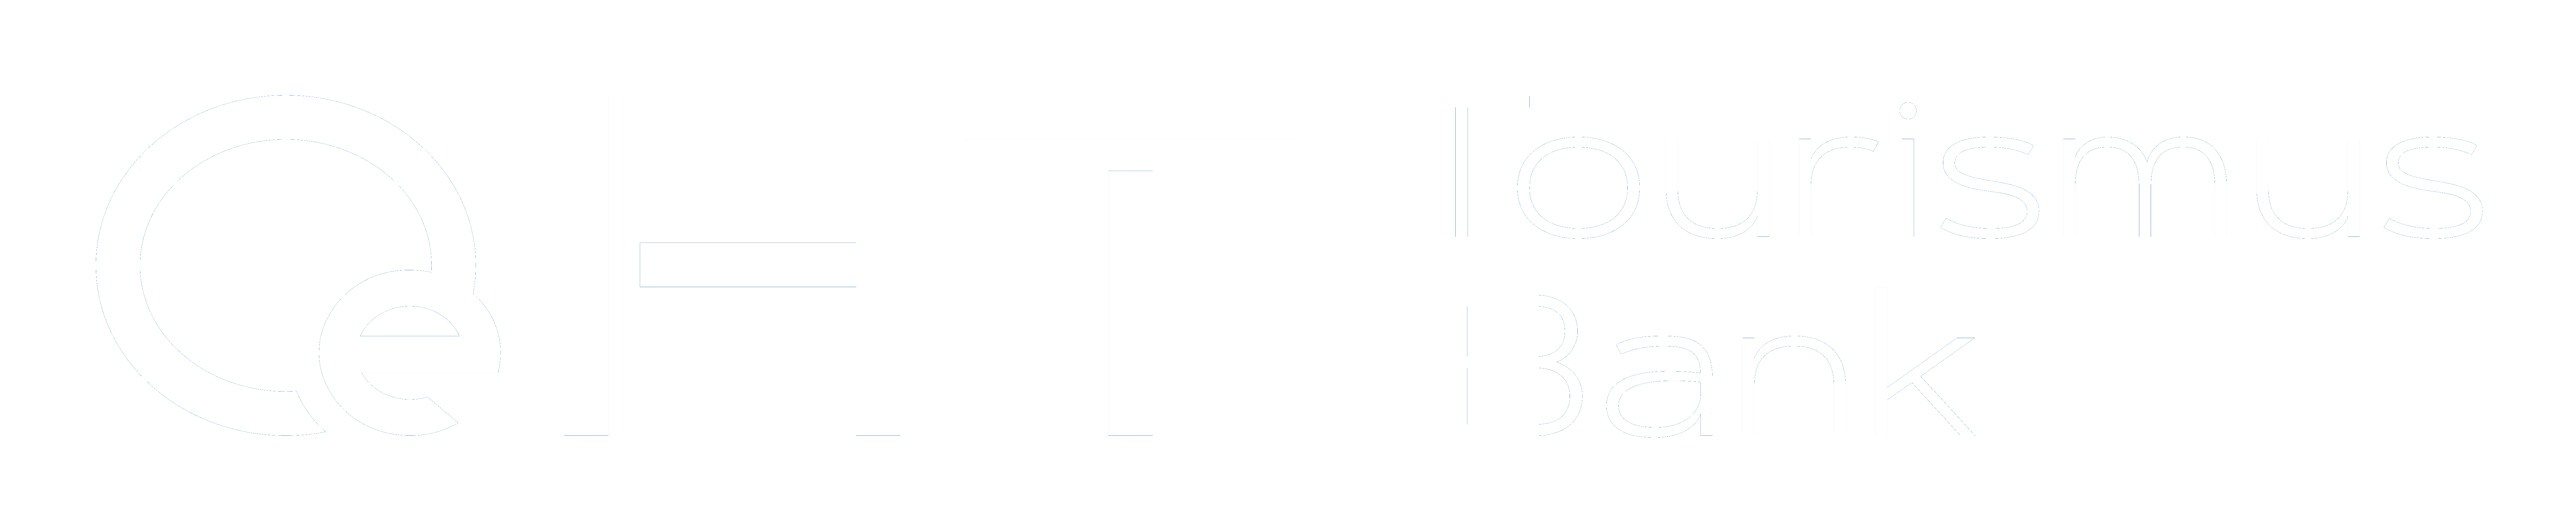 OeHT Tourismusbank Logo